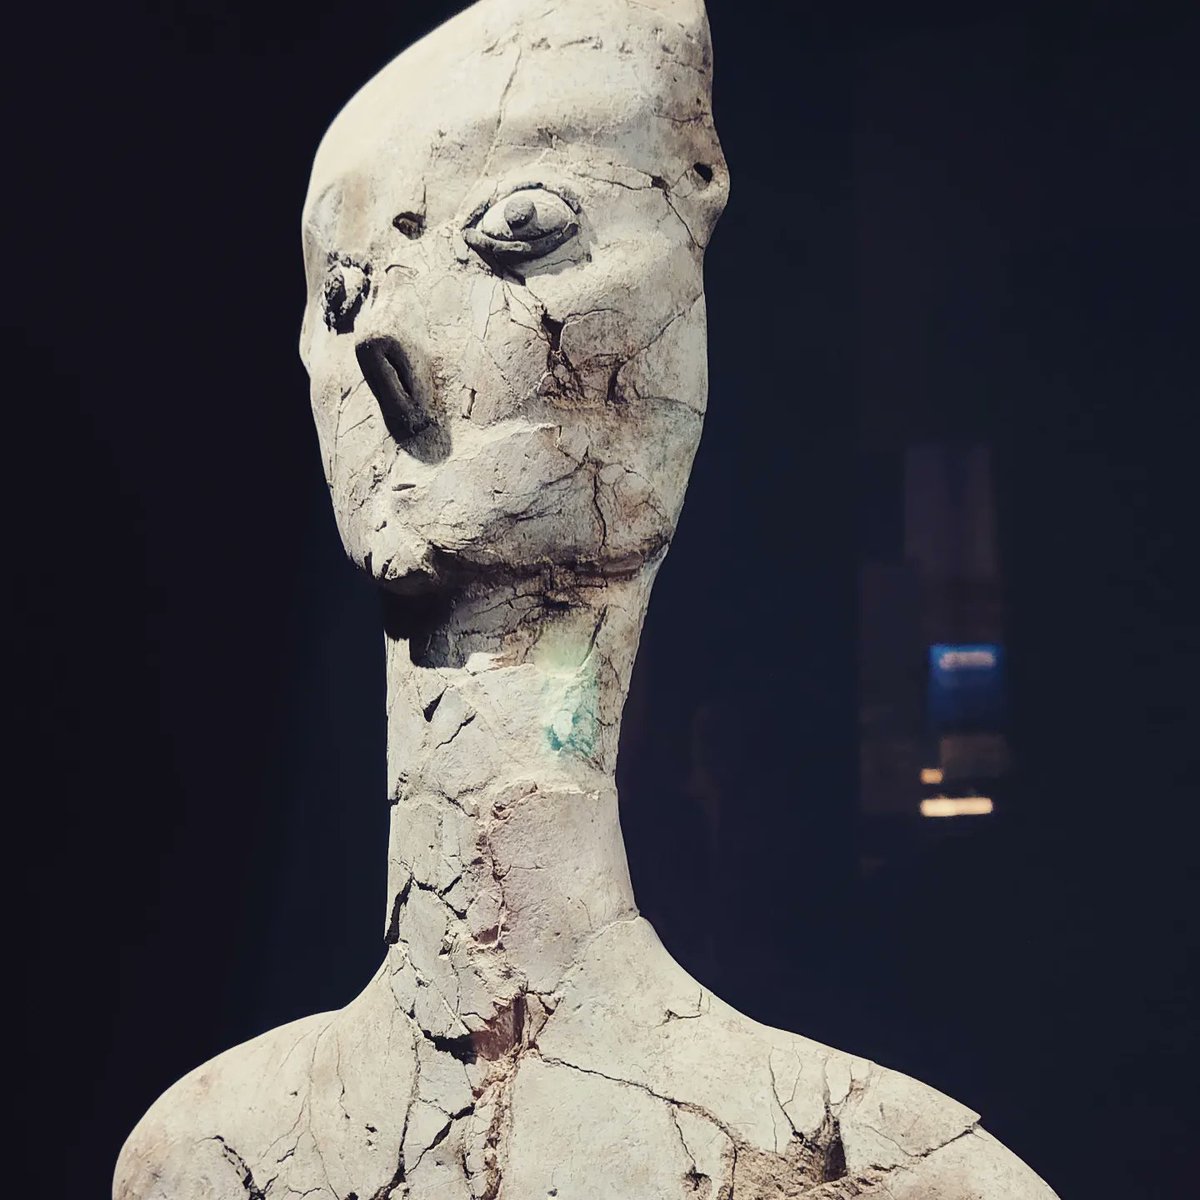 Oldest statues on earth, 9,000 years old 🤯
🗺📍
#amman #jordan
📸
#ainghazal
♯
#travel #adventure #visitjordan #history #neolithic #pottery #statue #museum #shareyourjordan
 👀
@VisitJordan 🇯🇴
@MOTA_Jordan 🏰
@thejordanmuseum 🏛️
@BradtGuides 📖